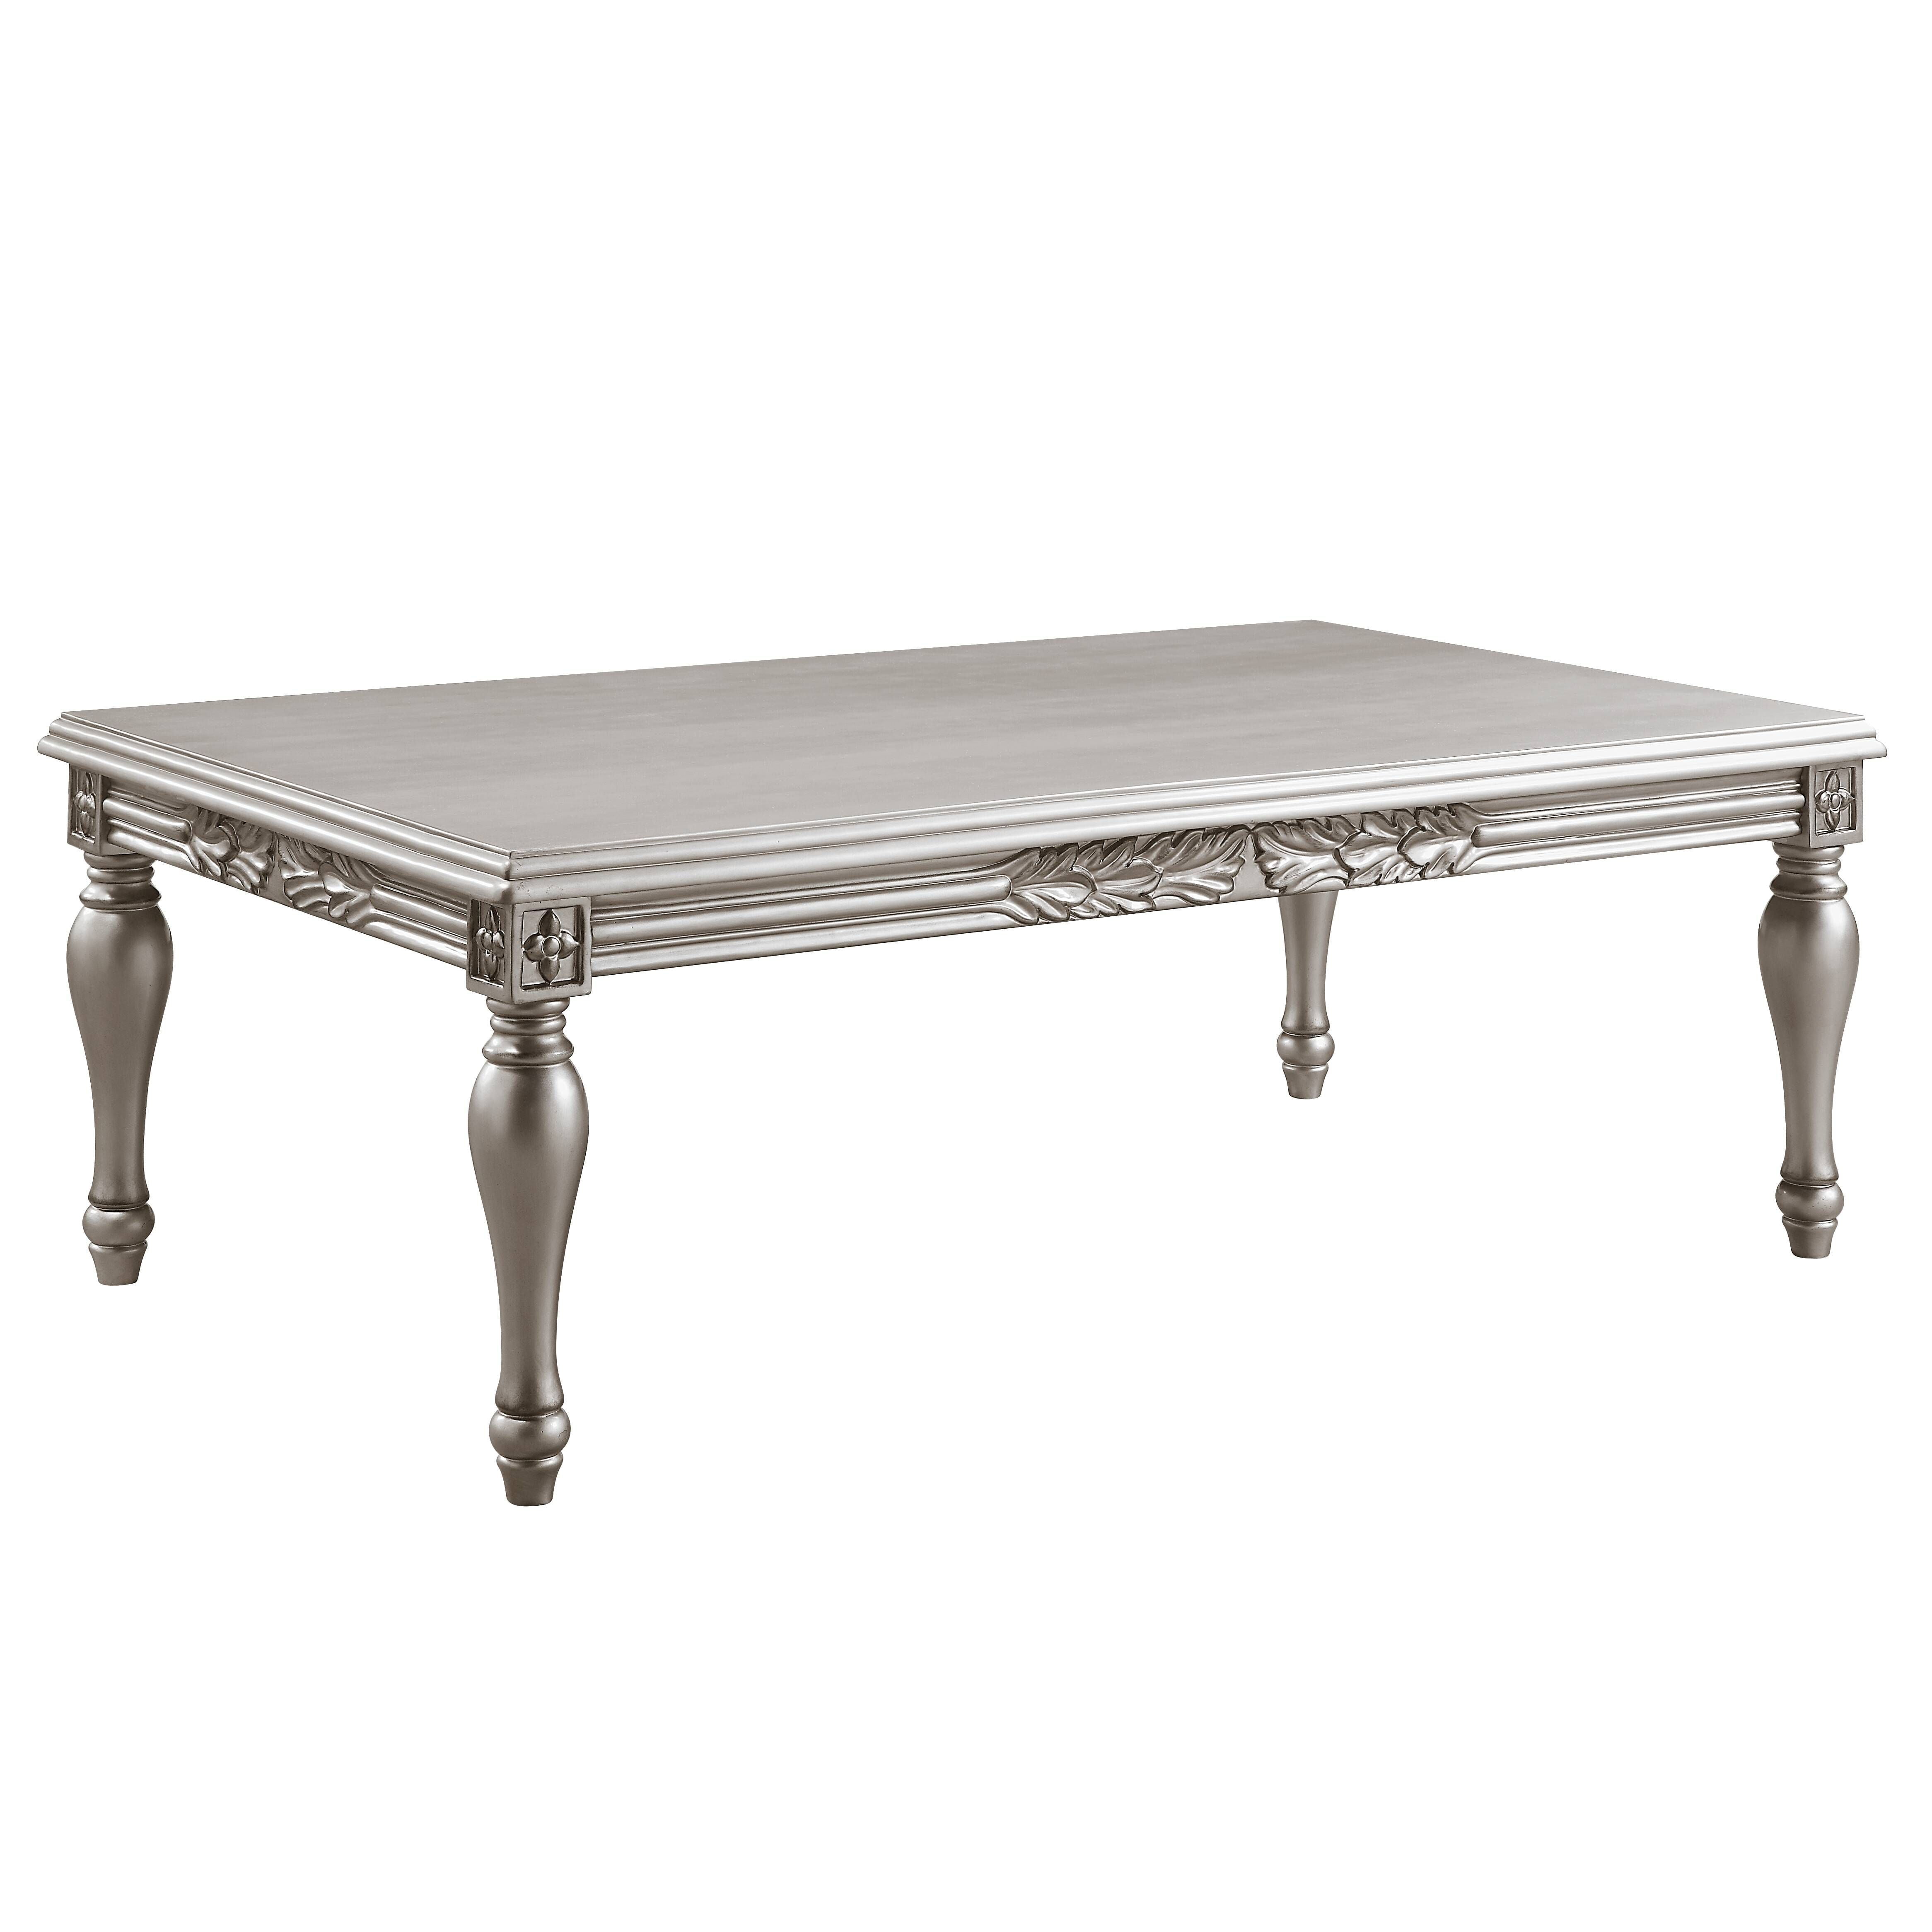 Picture of Acme Furniture LV01115 59 x 34 x 20 in. Pelumi Coffee Table, Platinum